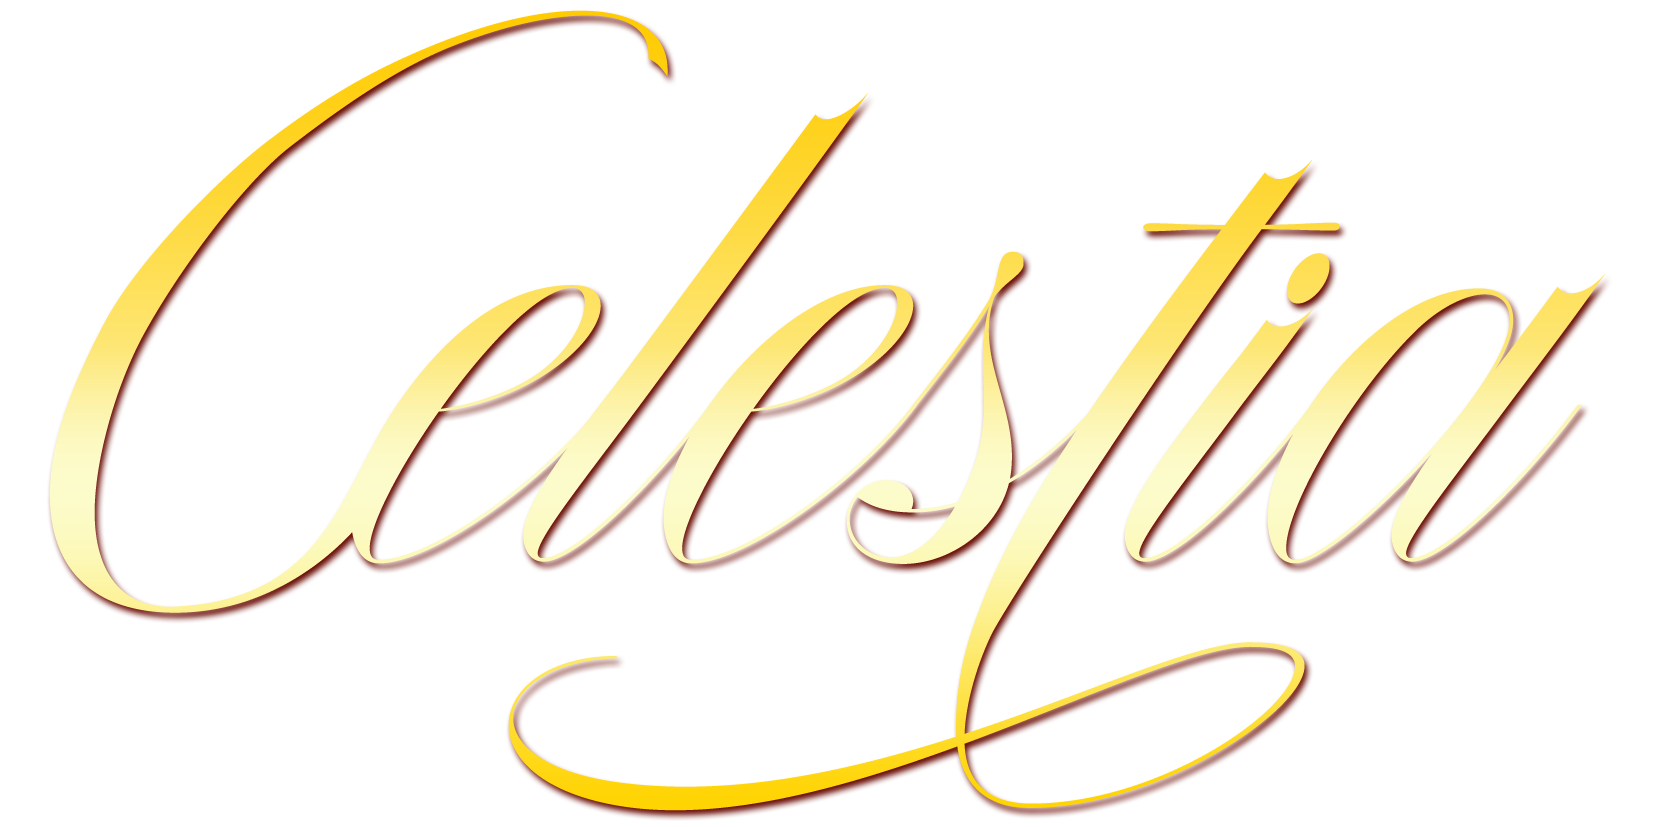 Celestia